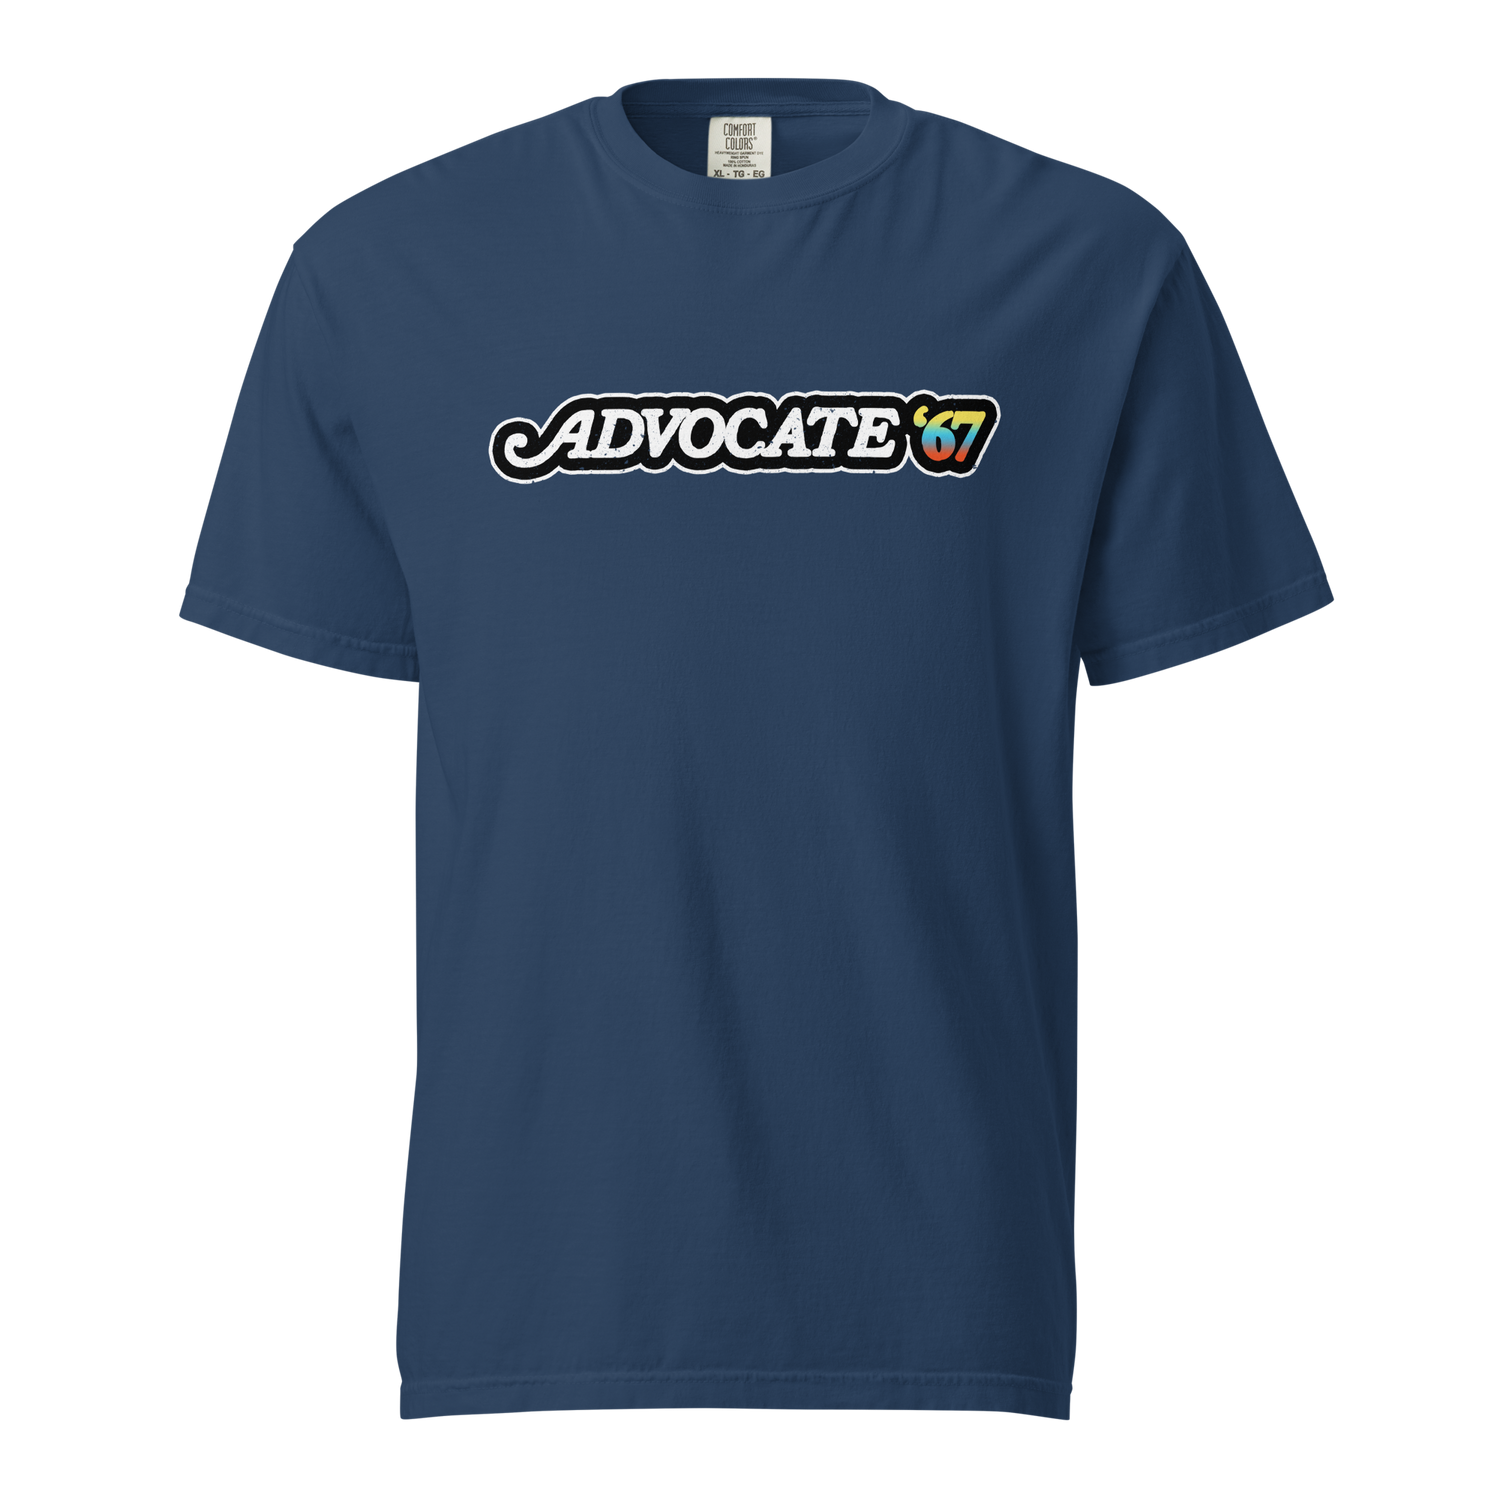 Advocate ‘67 Unisex Garment-dyed Heavyweight T-shirt (Rainbow)